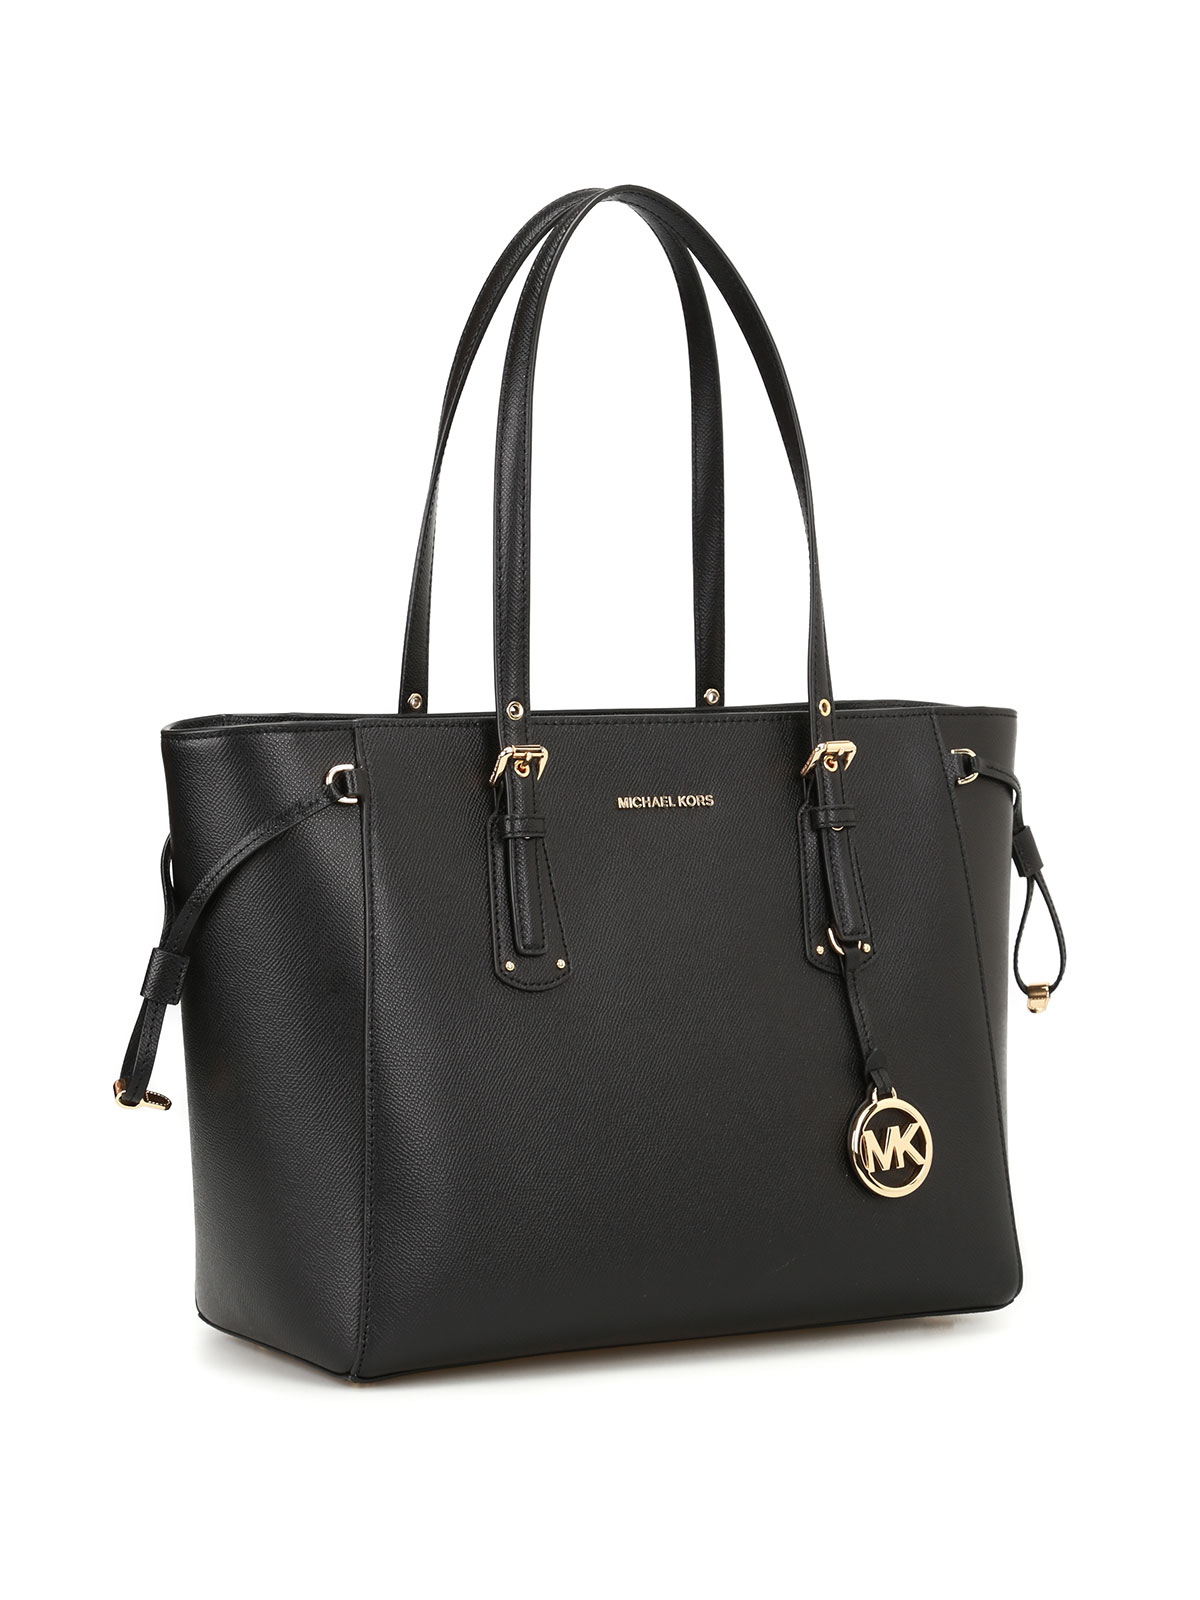 Totes bags Michael Kors - Voyager leather medium shopper - 30H7GV6T8L001